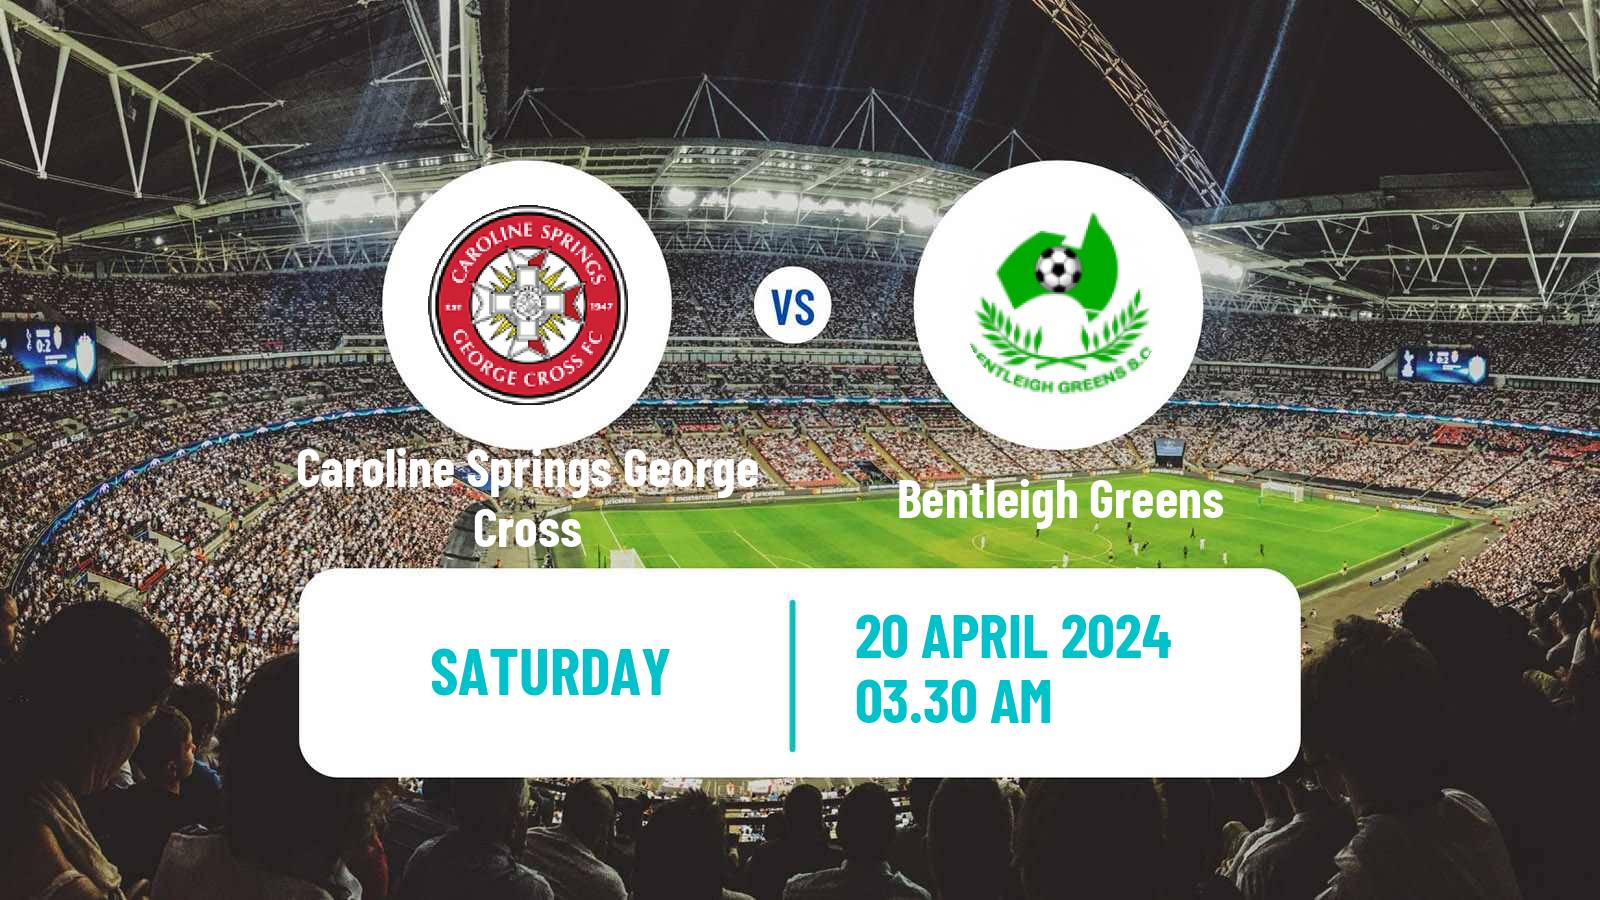 Soccer Australian Victoria Premier League Caroline Springs George Cross - Bentleigh Greens